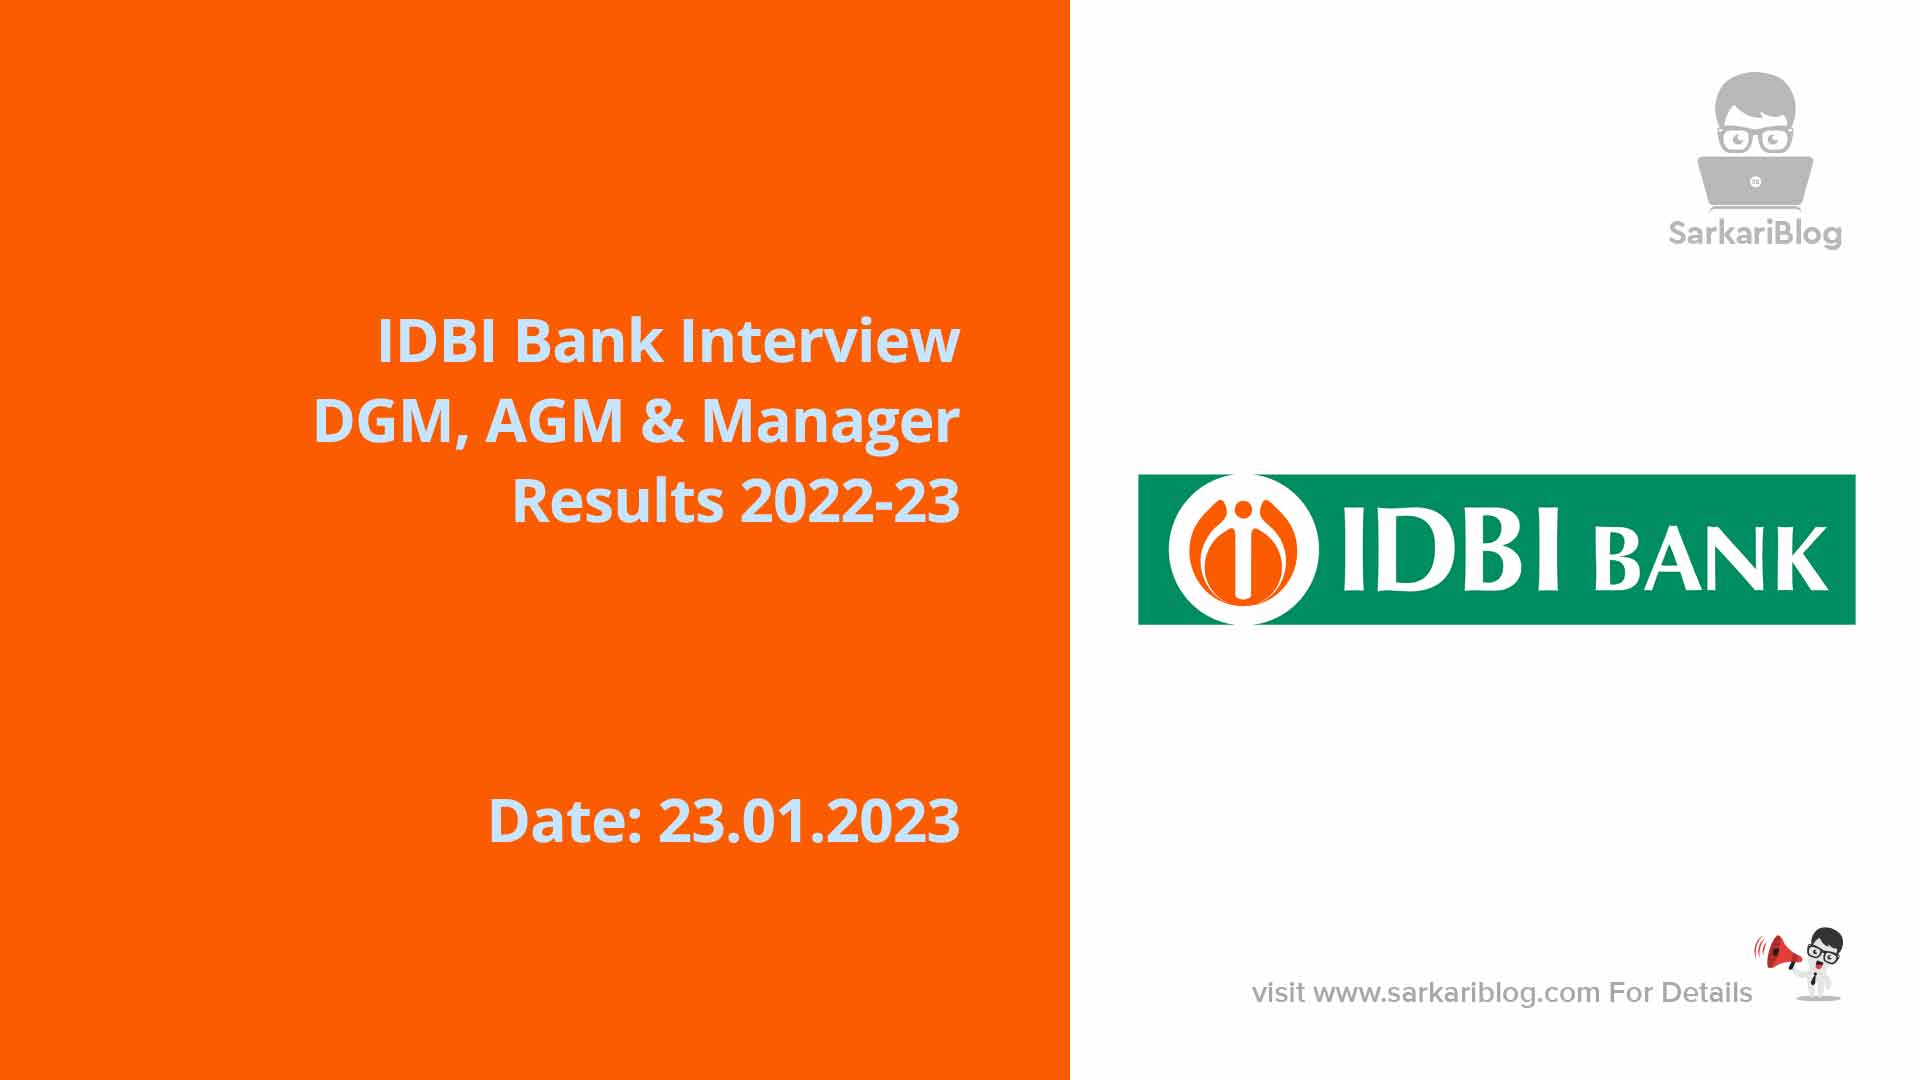 IDBI Bank Interview Results 2022-23